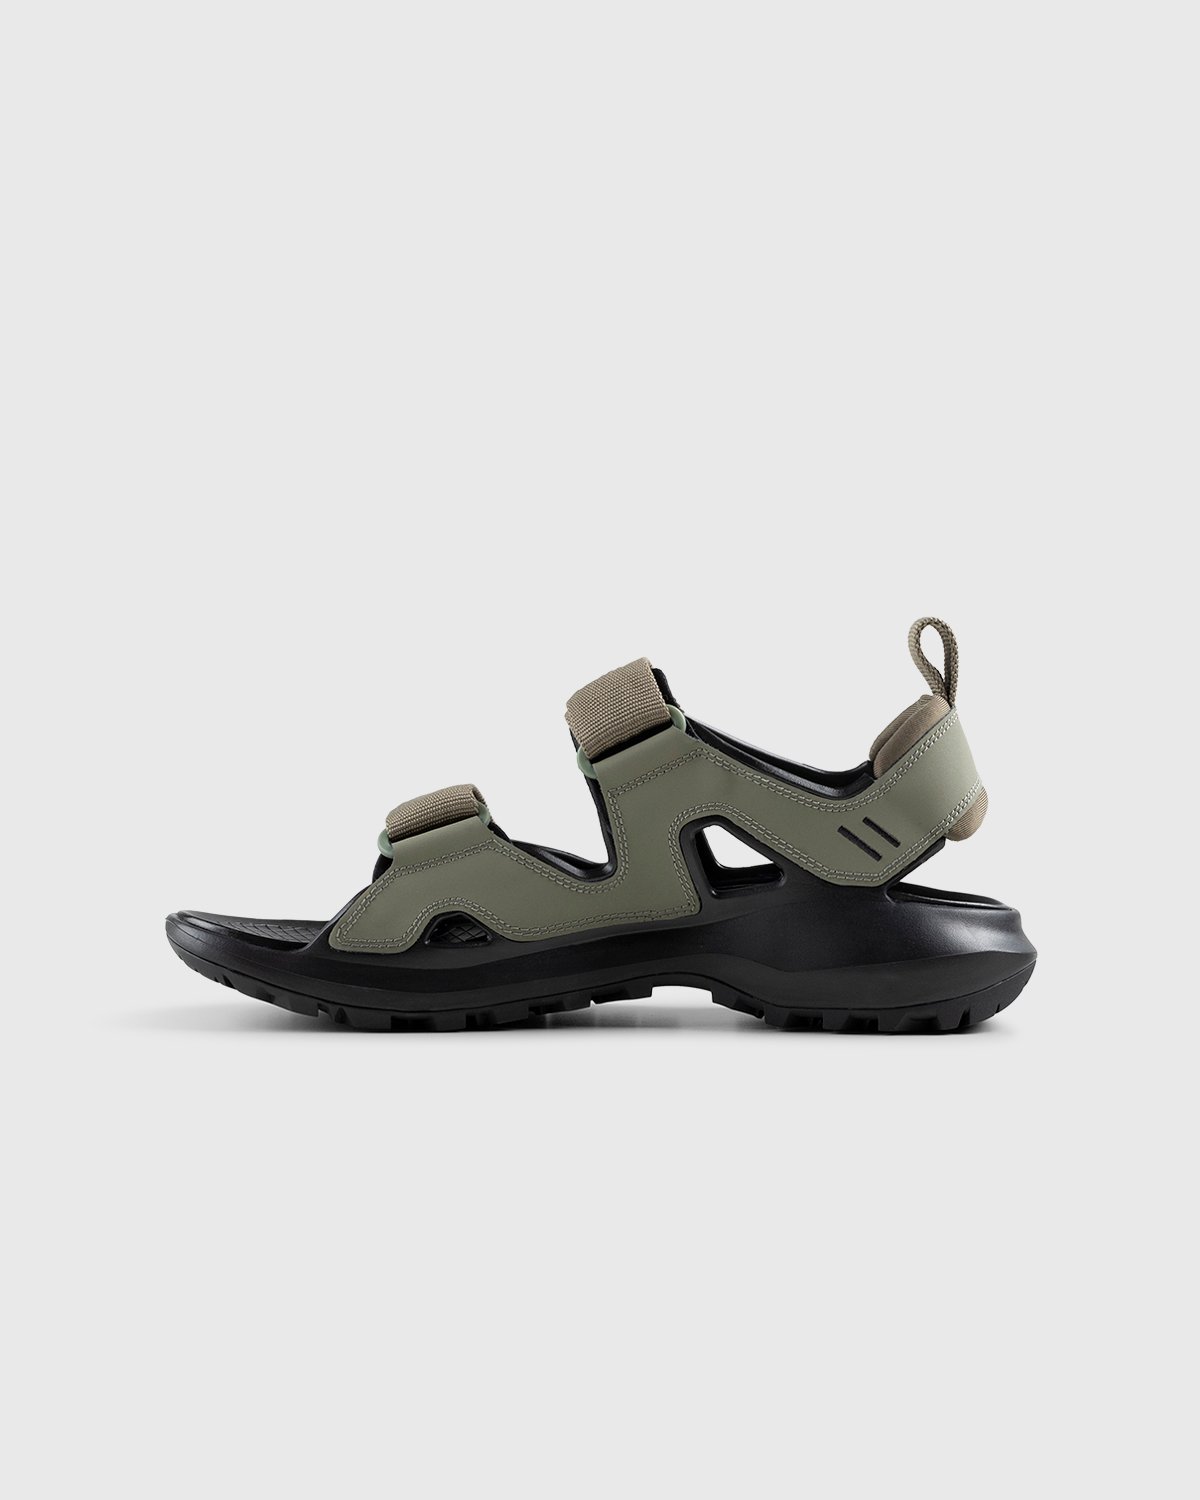 The North Face - Hedgehog Sandal III Burnt Olive Green/Black - Footwear - Green - Image 2